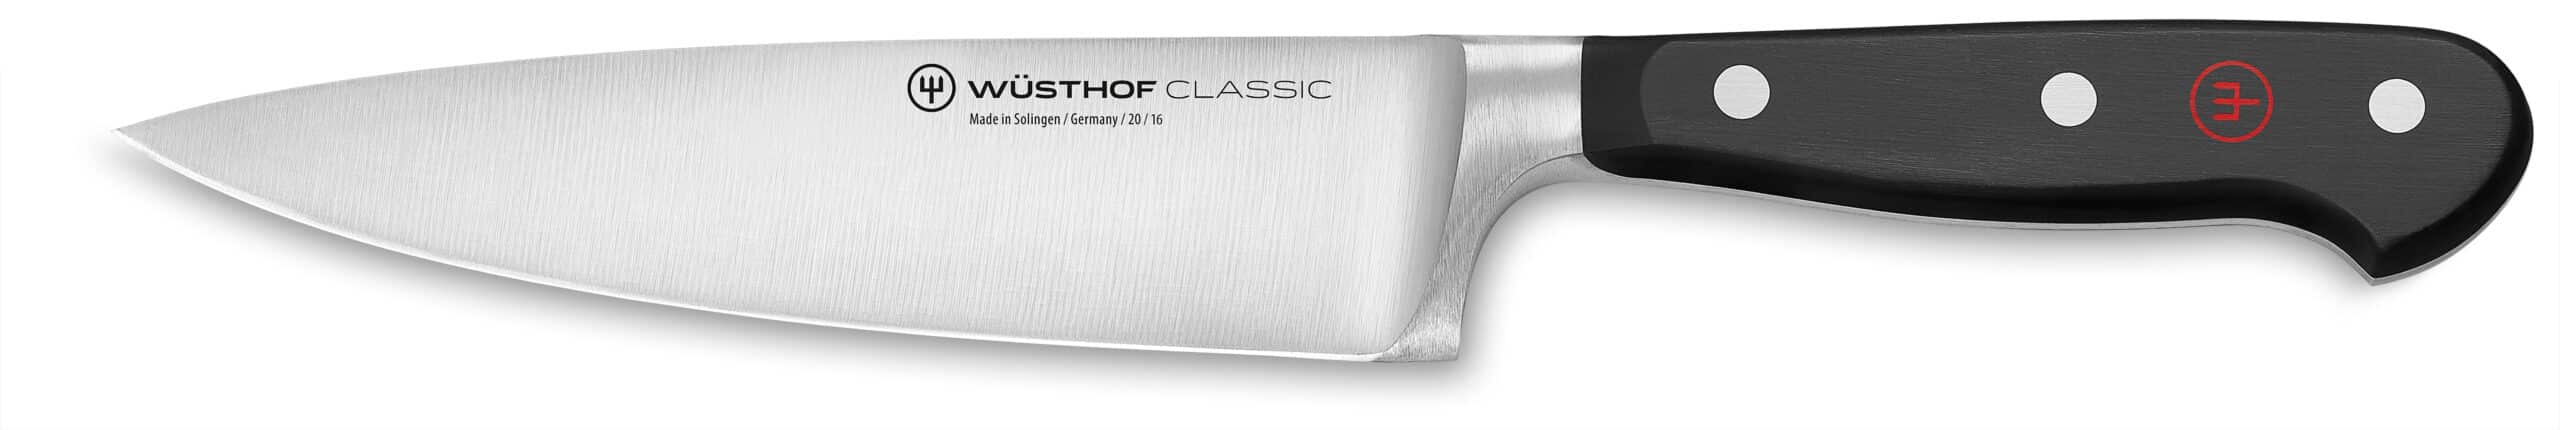 Wusthof Classic Cook's  Knife 16cm